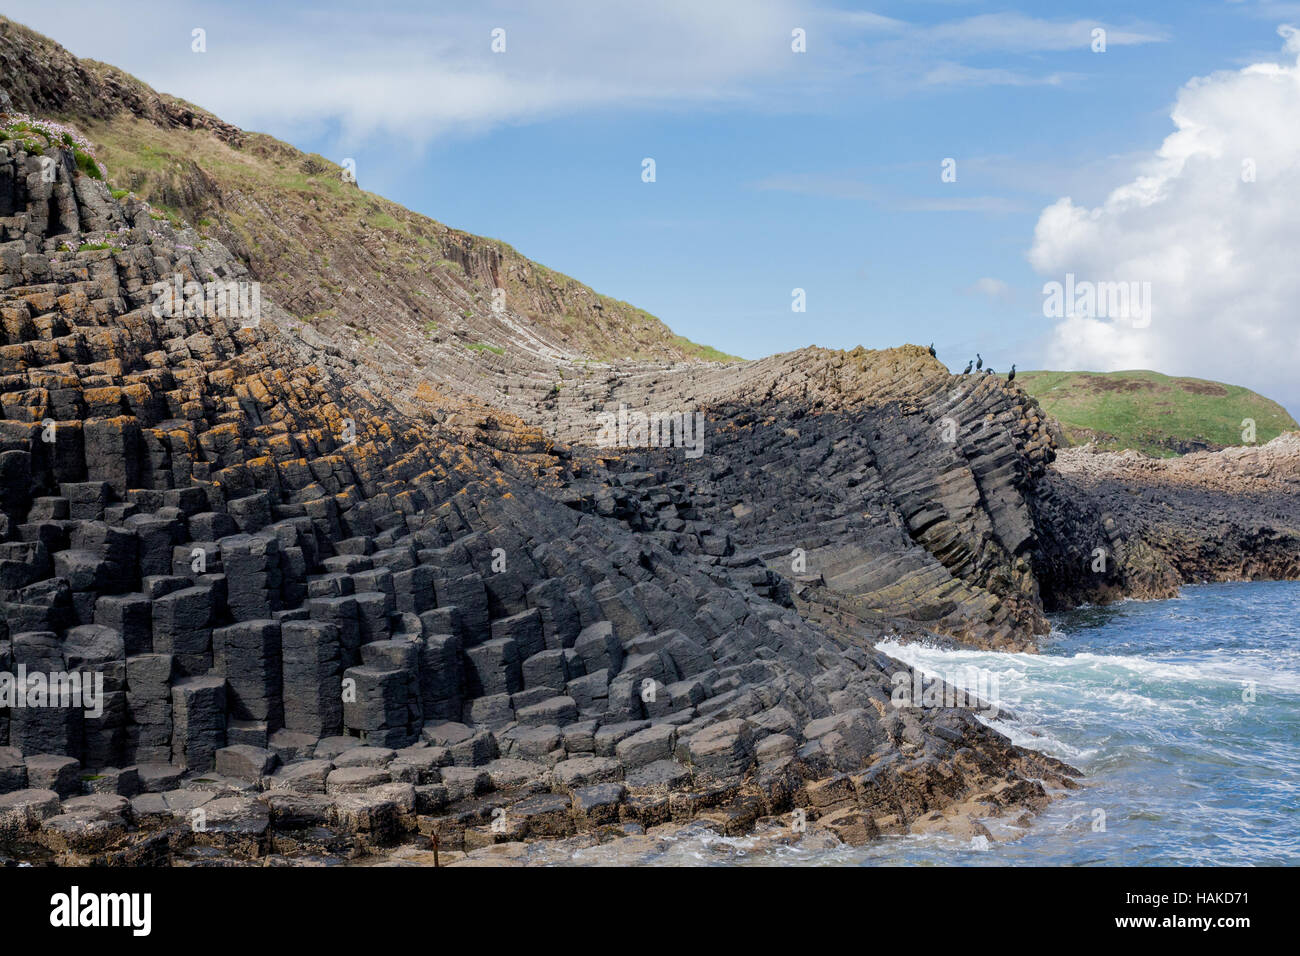 Sweeping basalt column rock formations on the Isle of Ulva coastline, Scotland, with defined intertidal zones Stock Photo